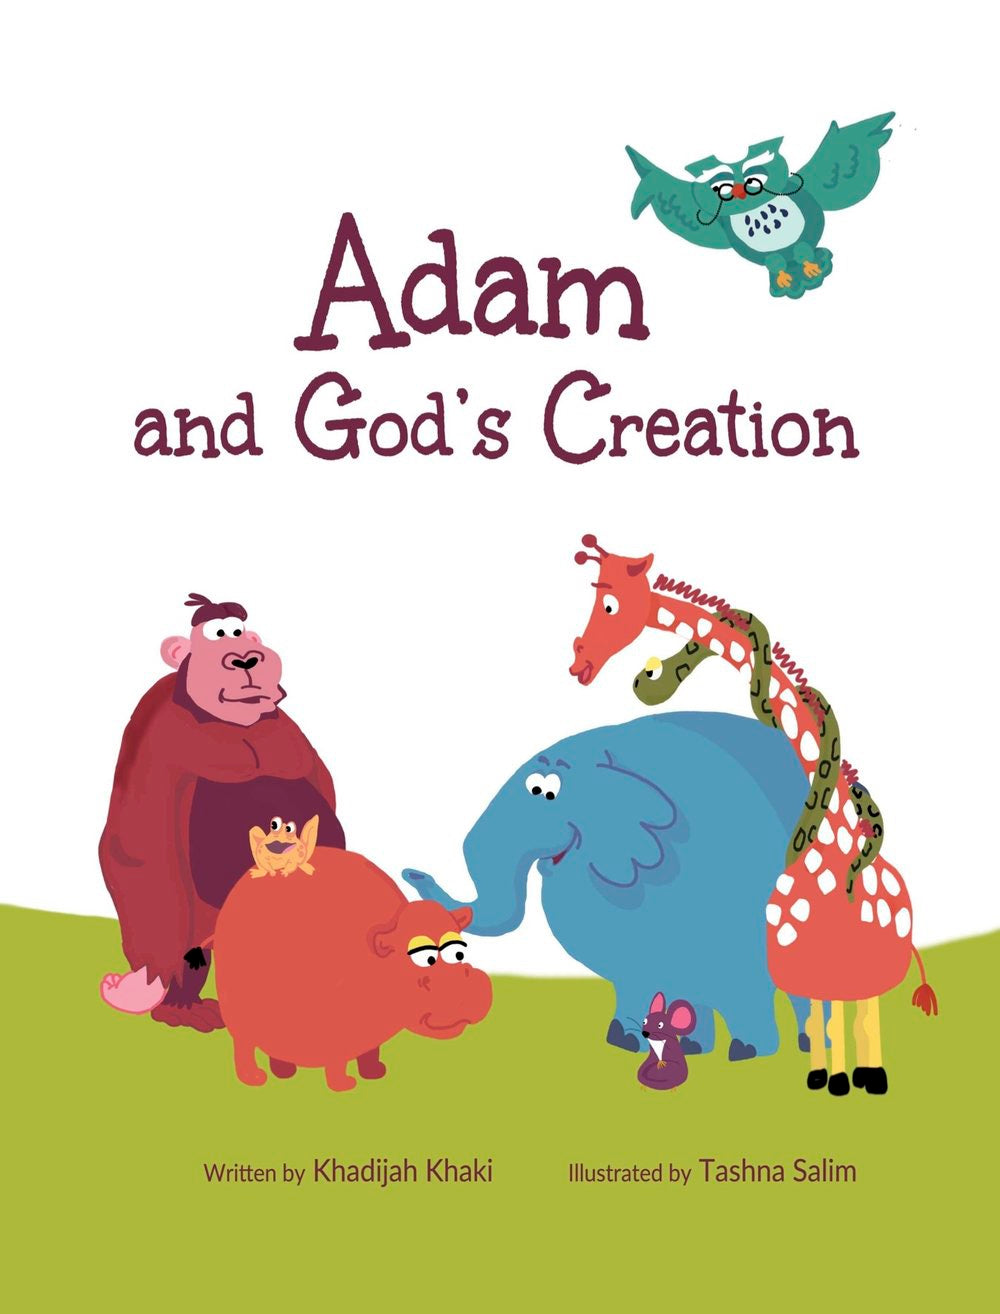 Prophet Adam and God’s Creation